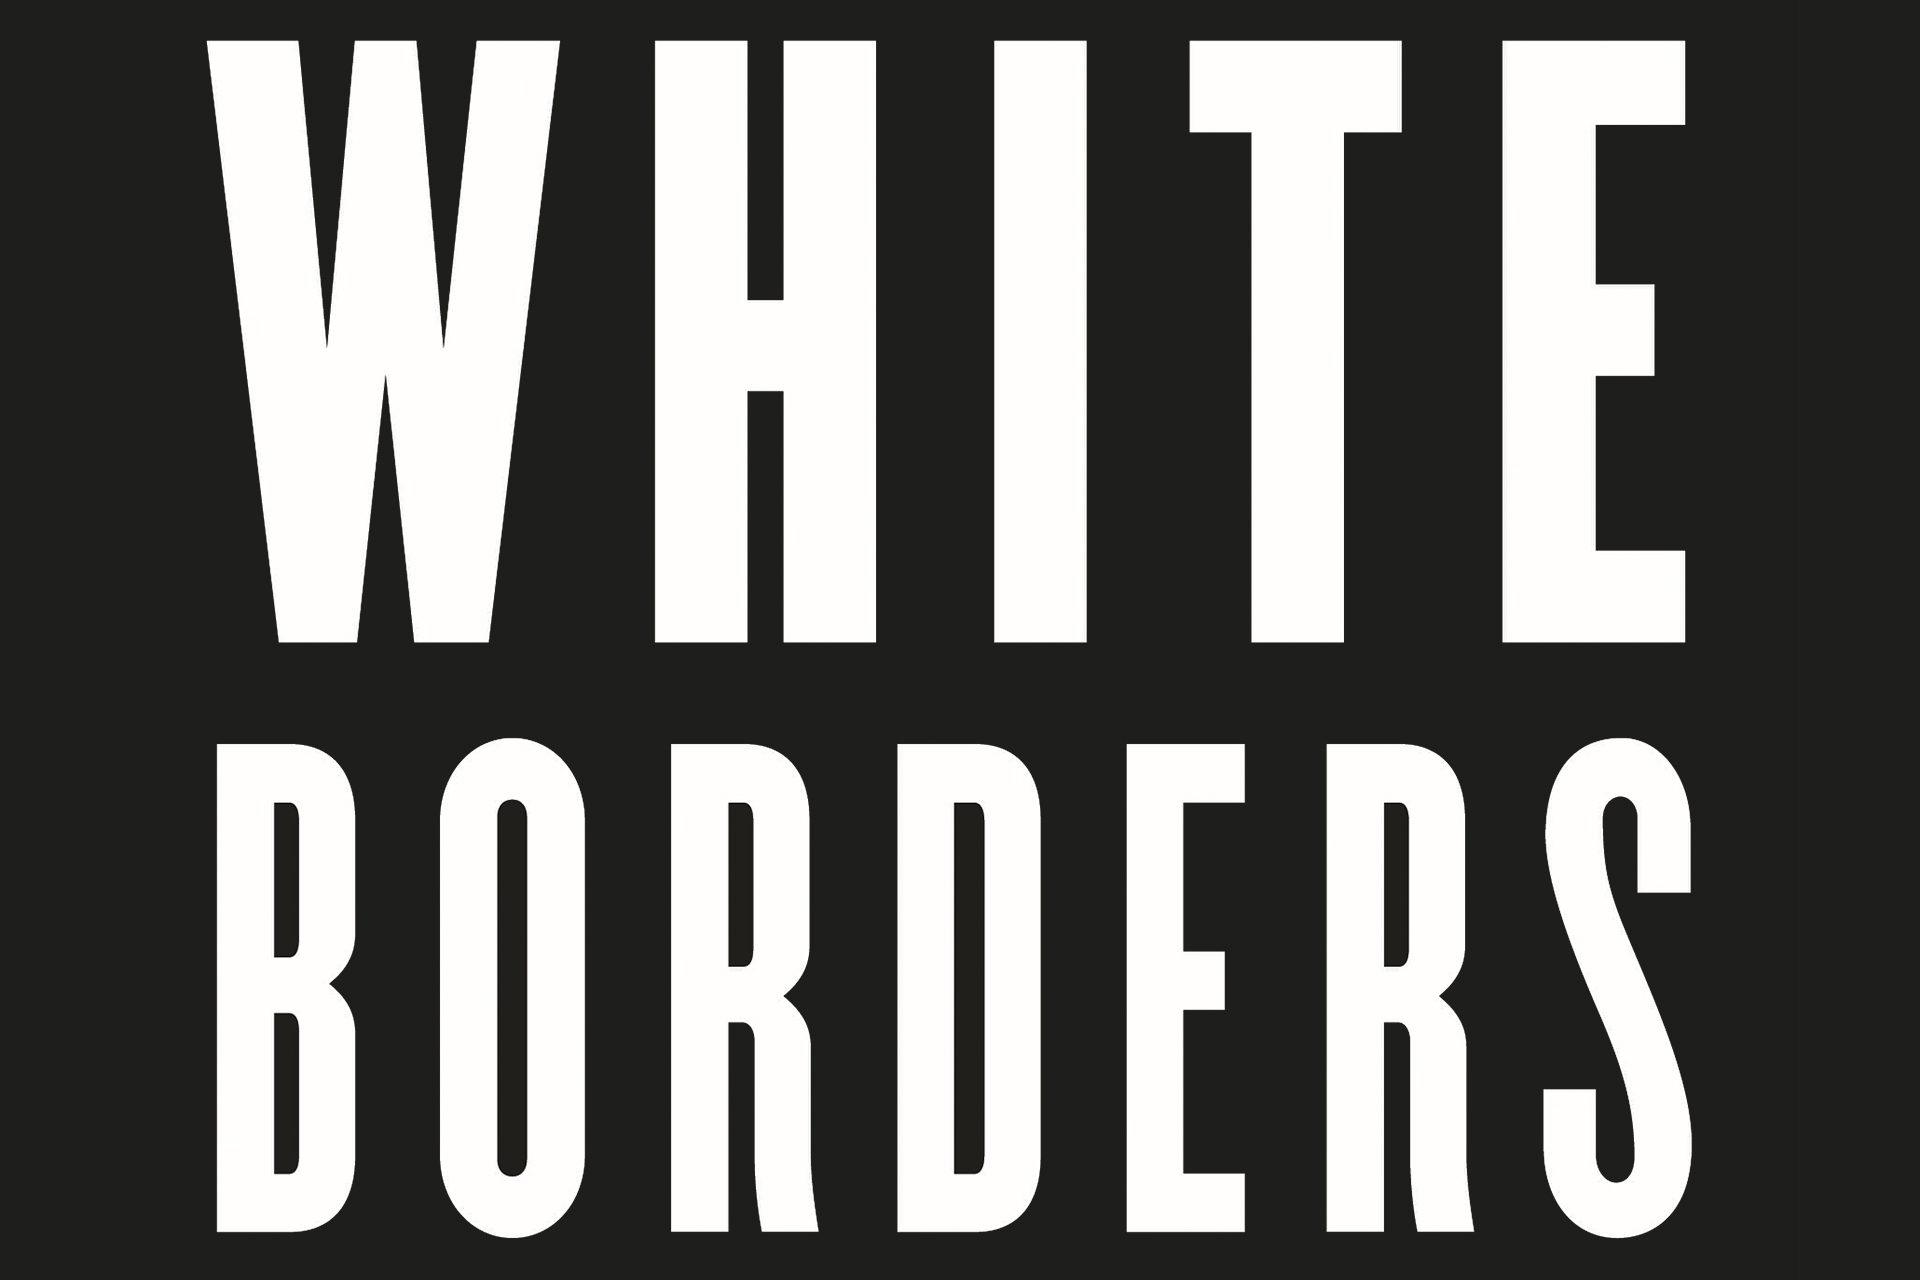 inmigración, periodismo, libro, fronteras, prohibición musulmana